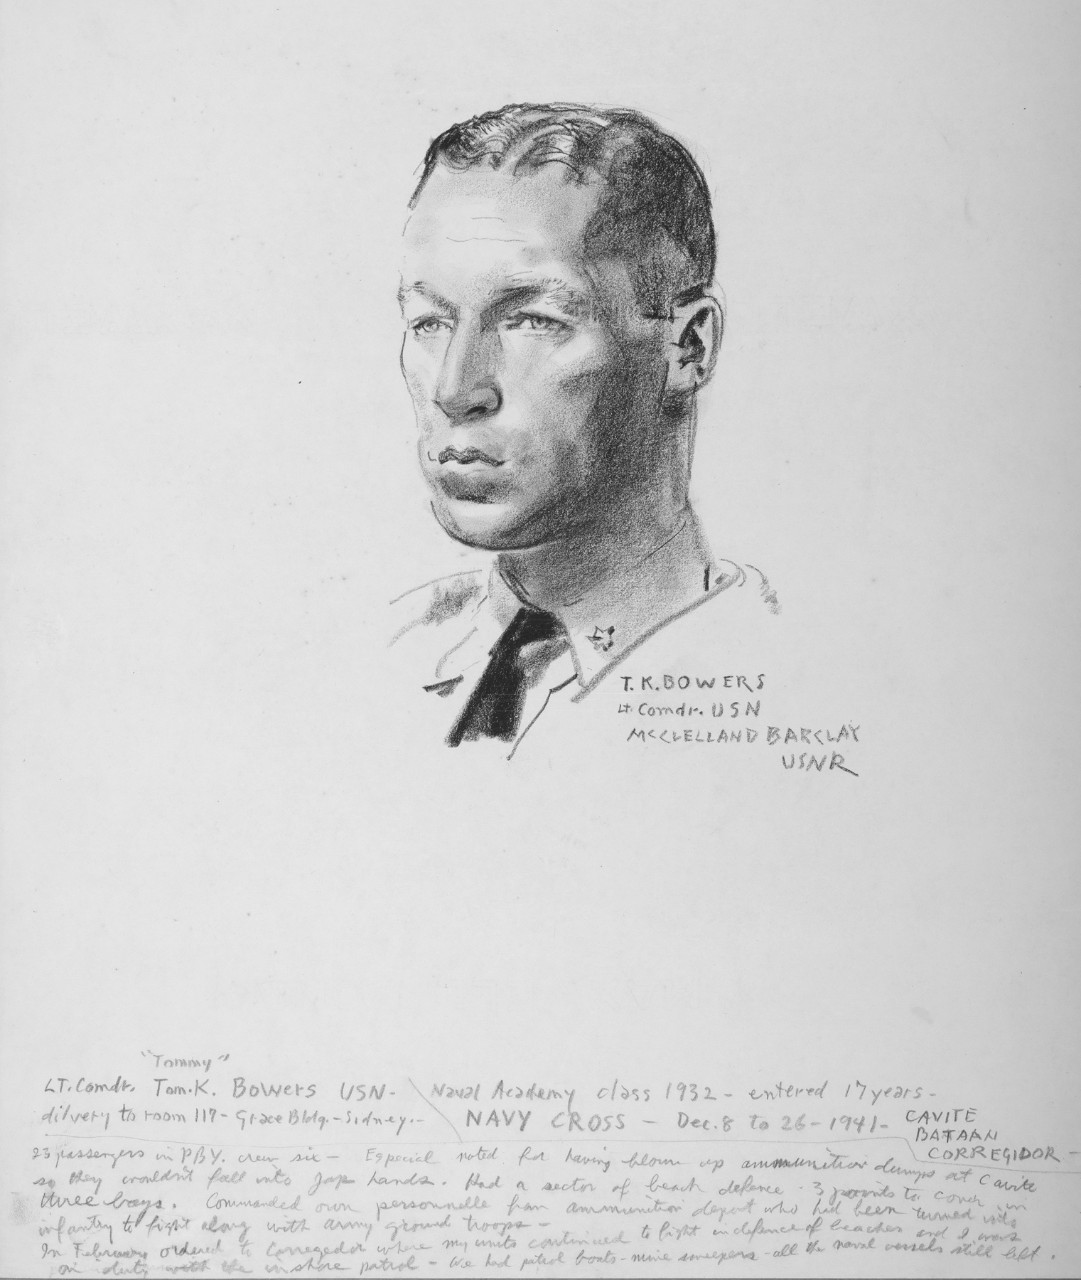 Portrait of LCDR T.K. Bowers